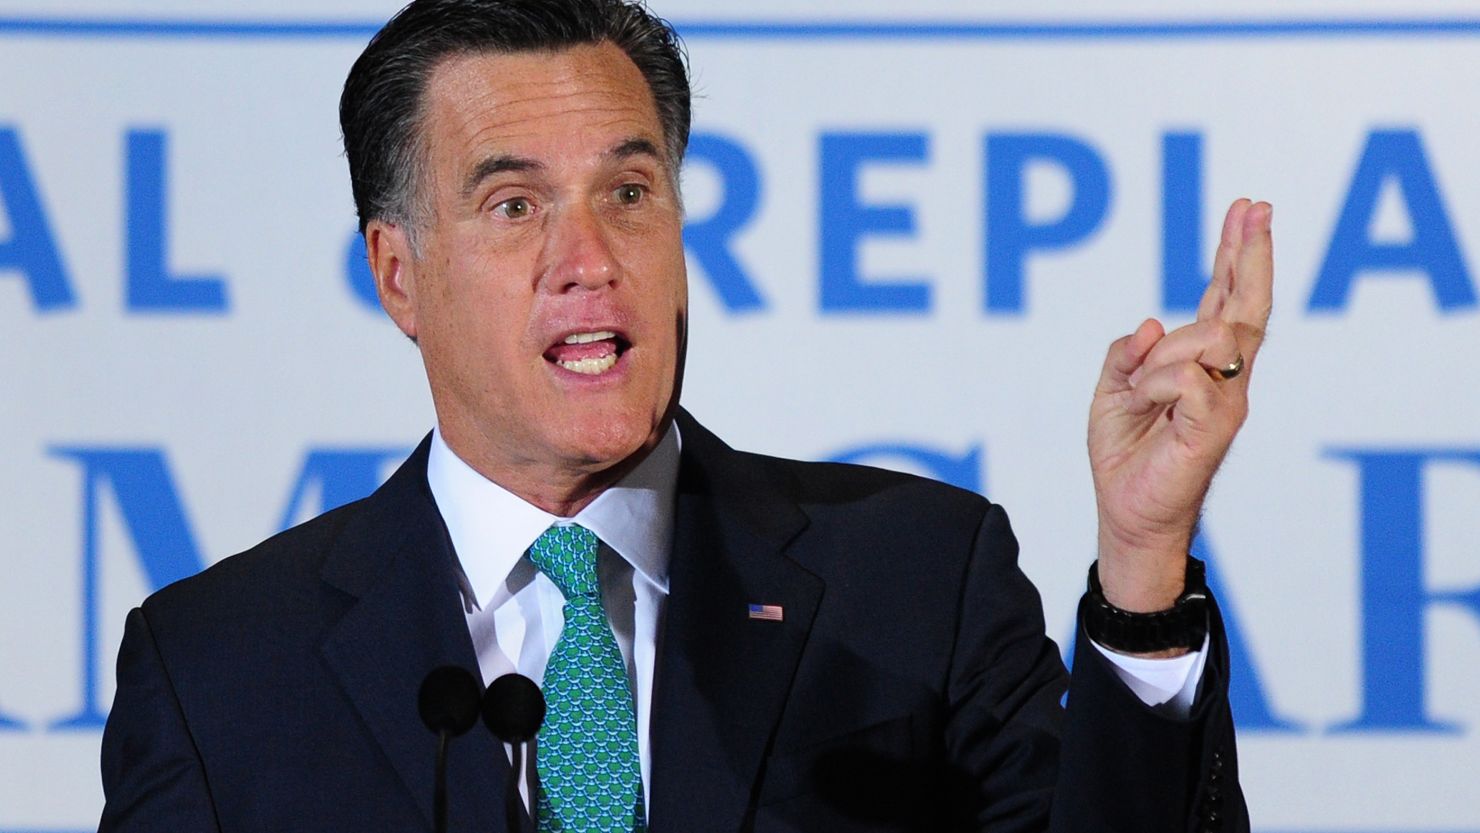 Polling indicates Mitt Romney has a 7-point advantage over Rick Santorum.